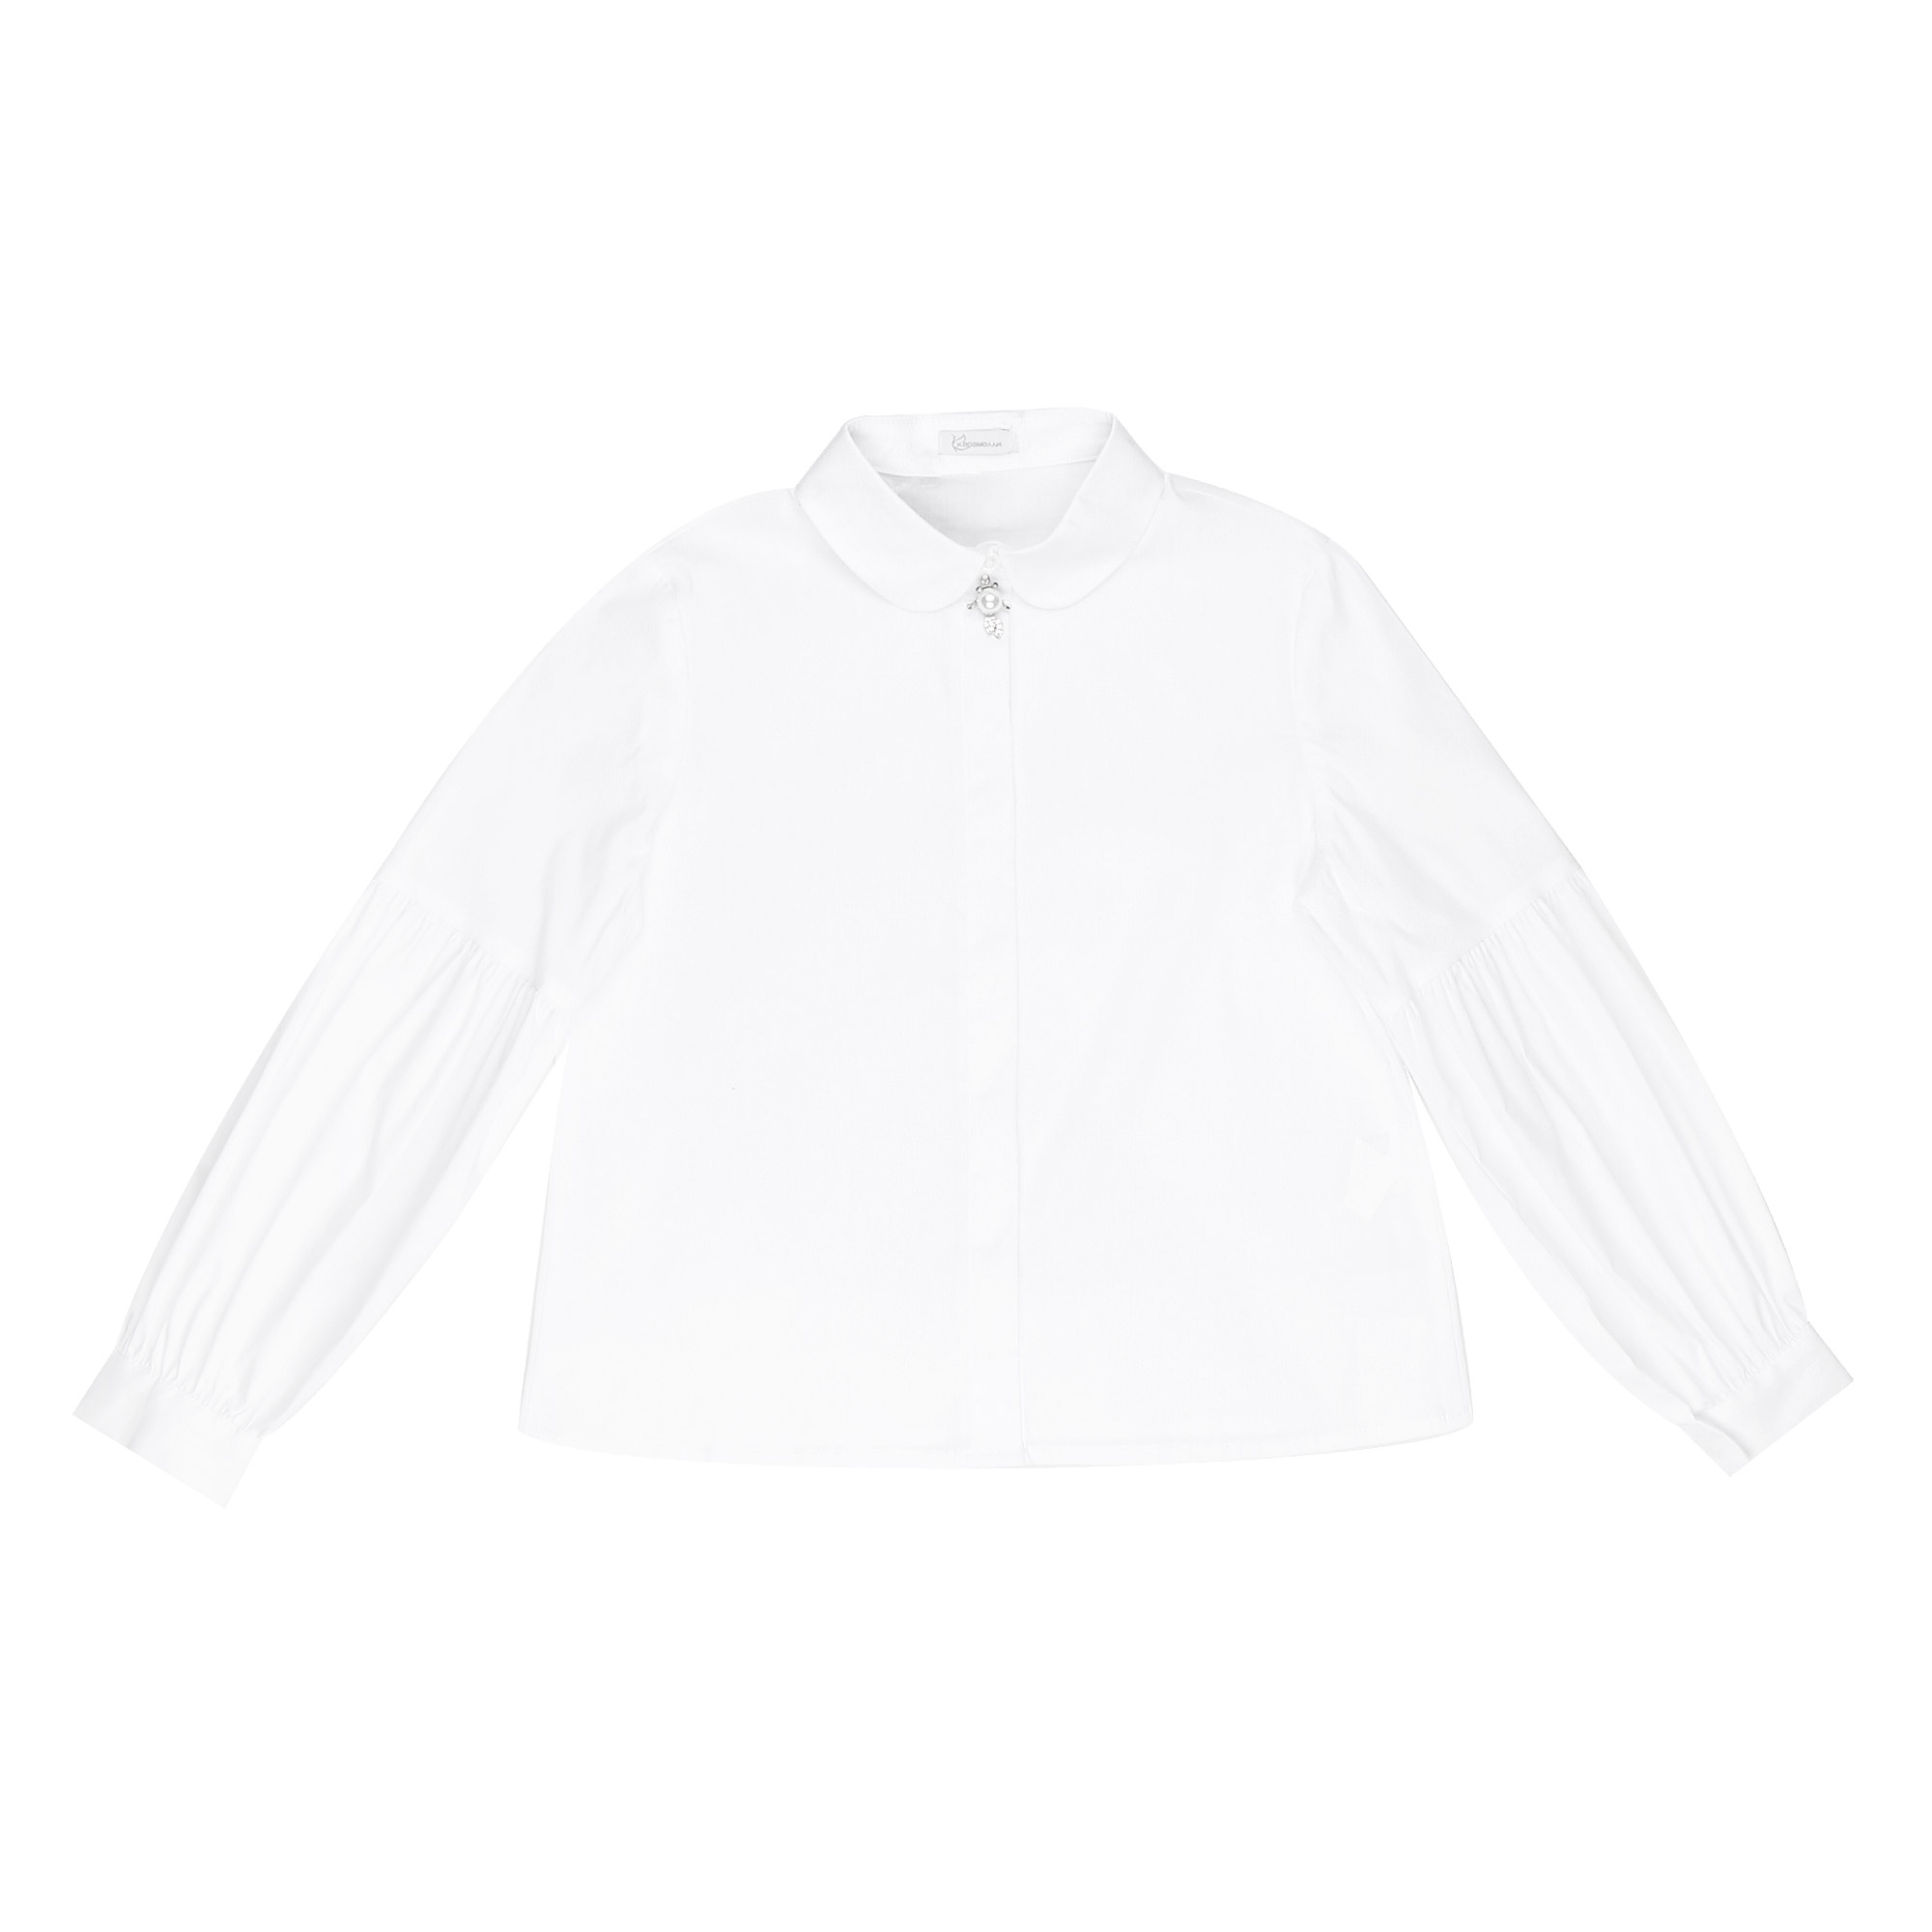 Блузка школьная КАРАМЕЛЛИ О74161 белая 134, цвет белый, размер 134 - фото 1